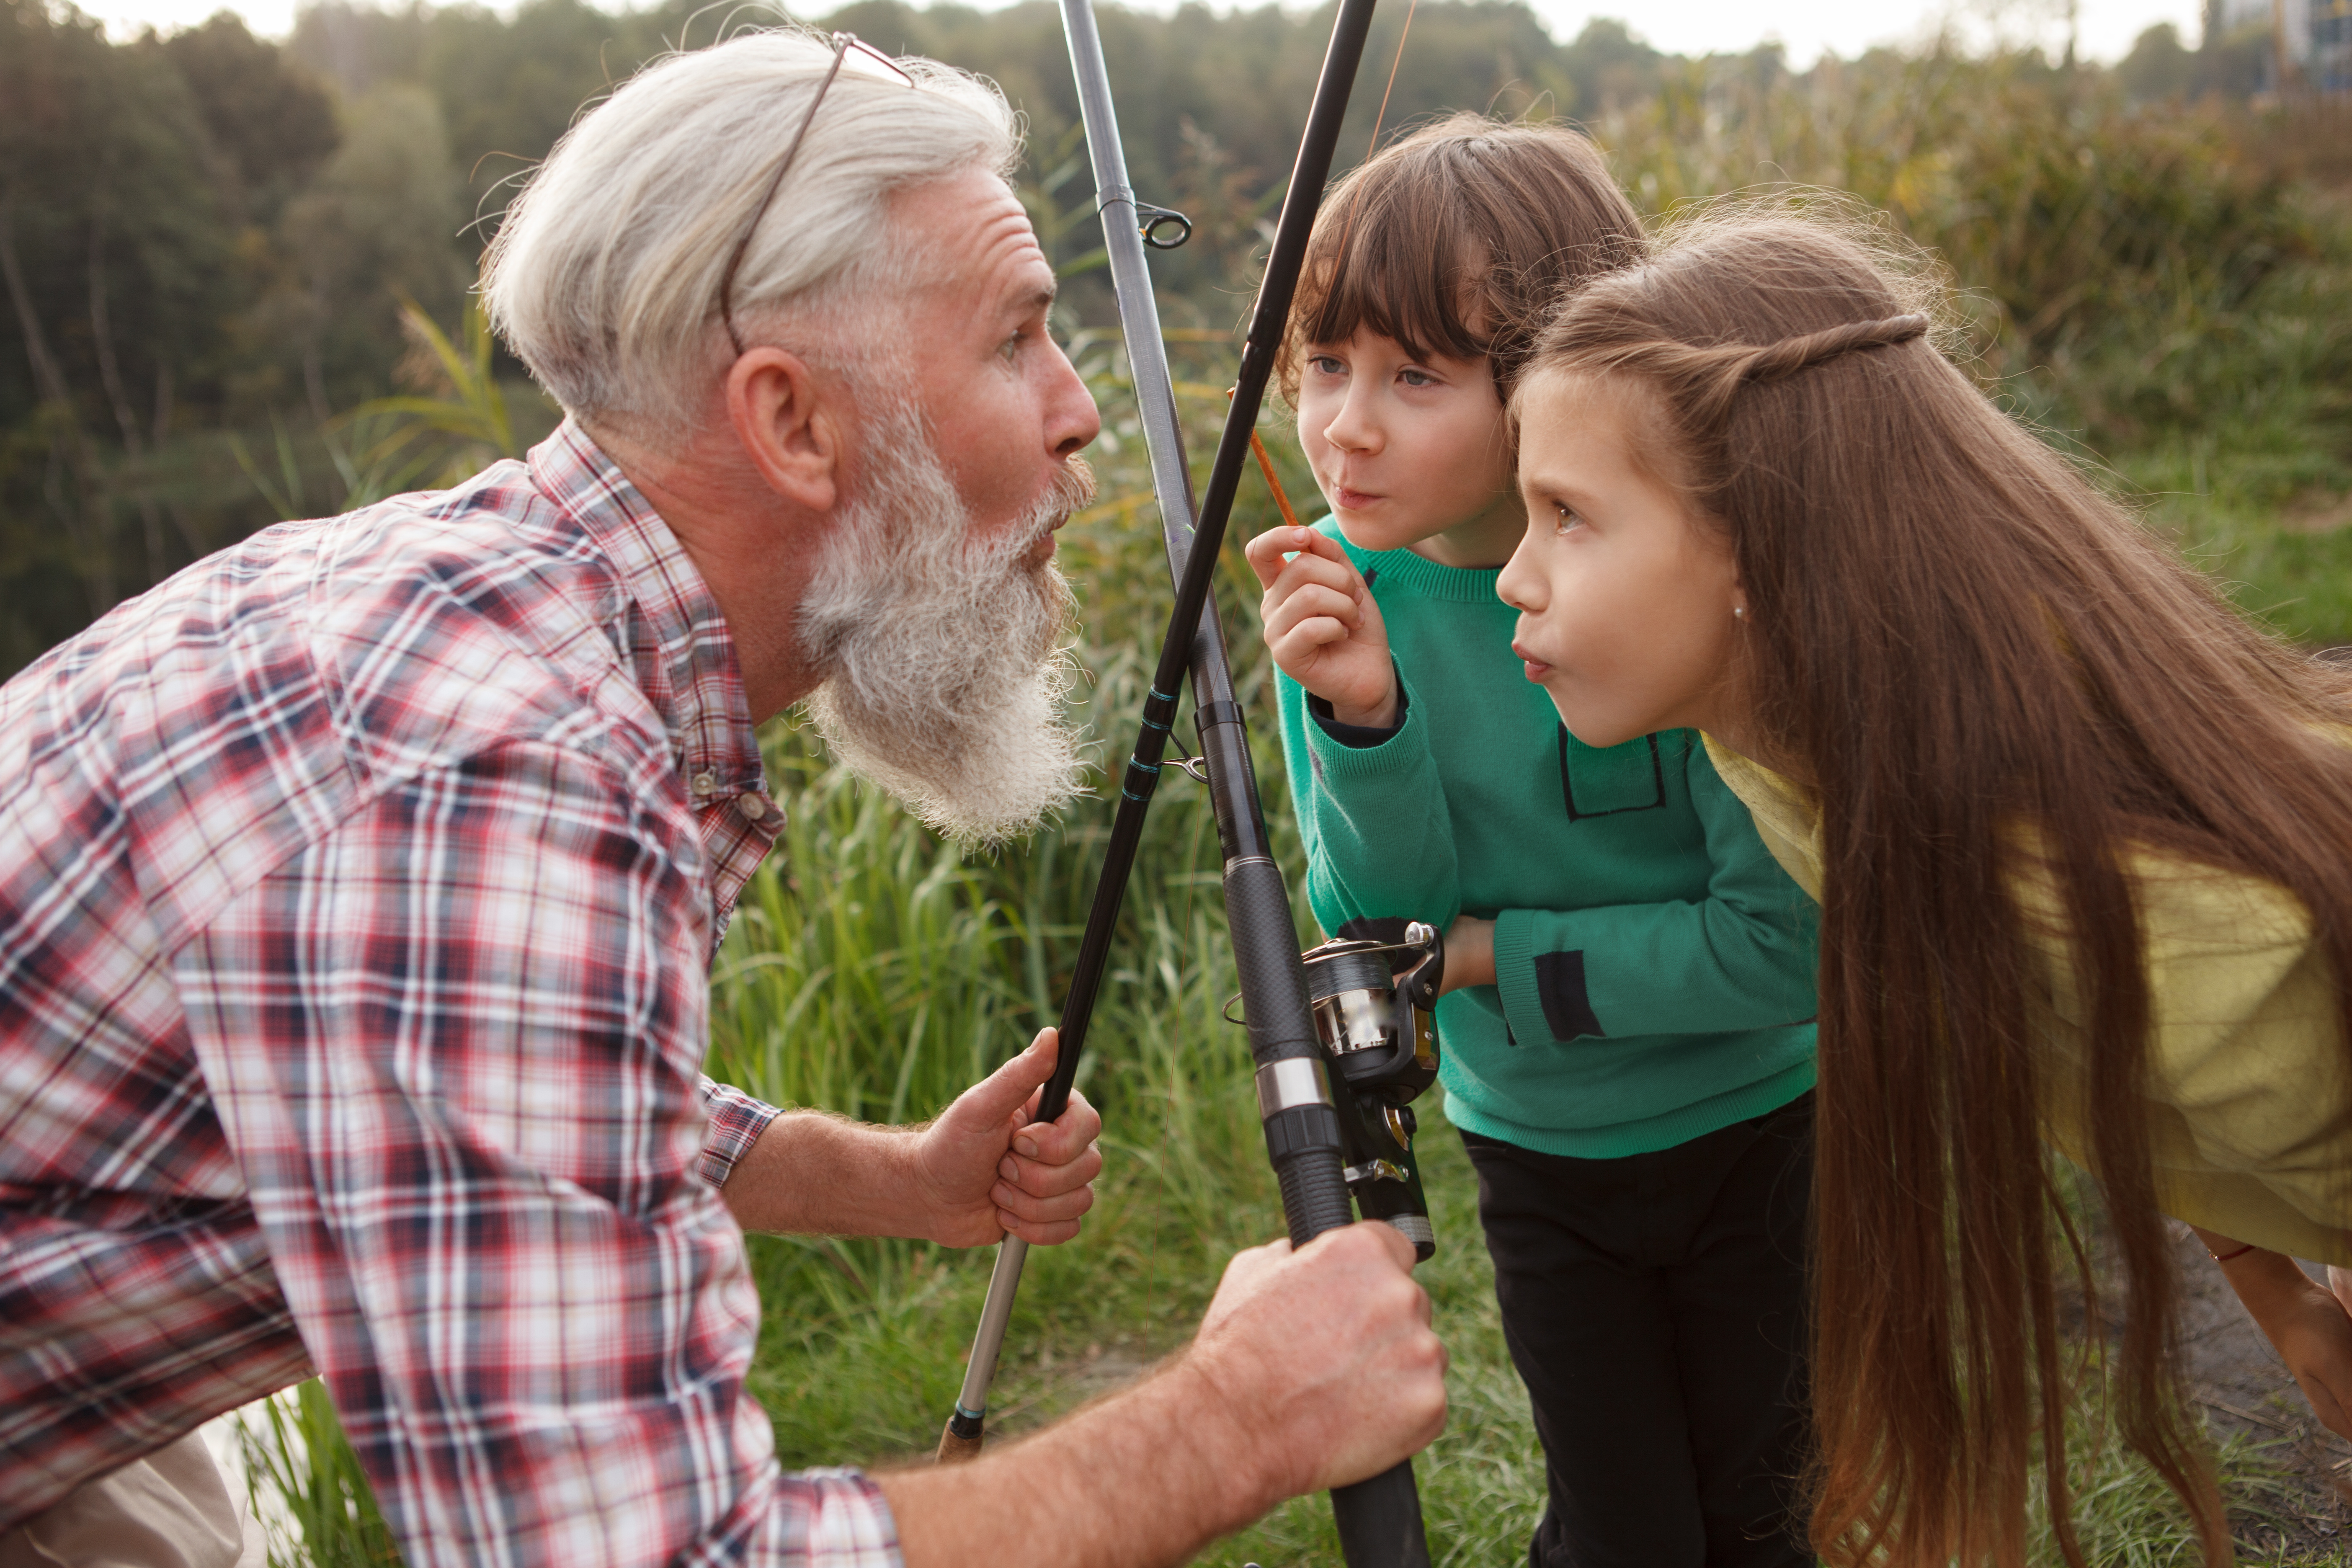 Two kids smile at an older man holding fishing poles